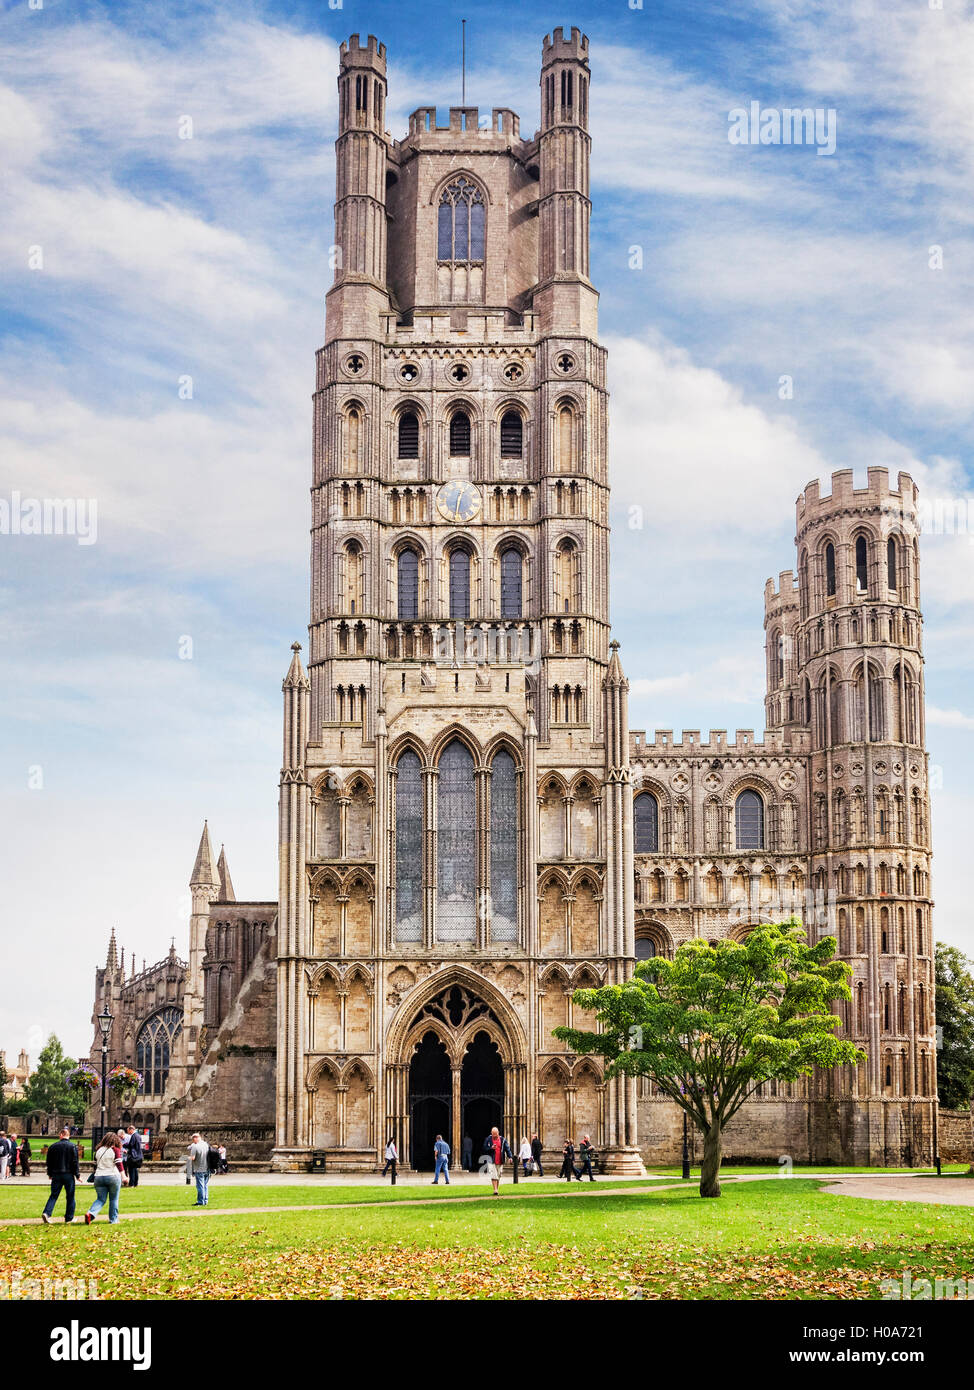 West Front of Ely Cathedral, Cambridgeshire, England, UK Stock Photo